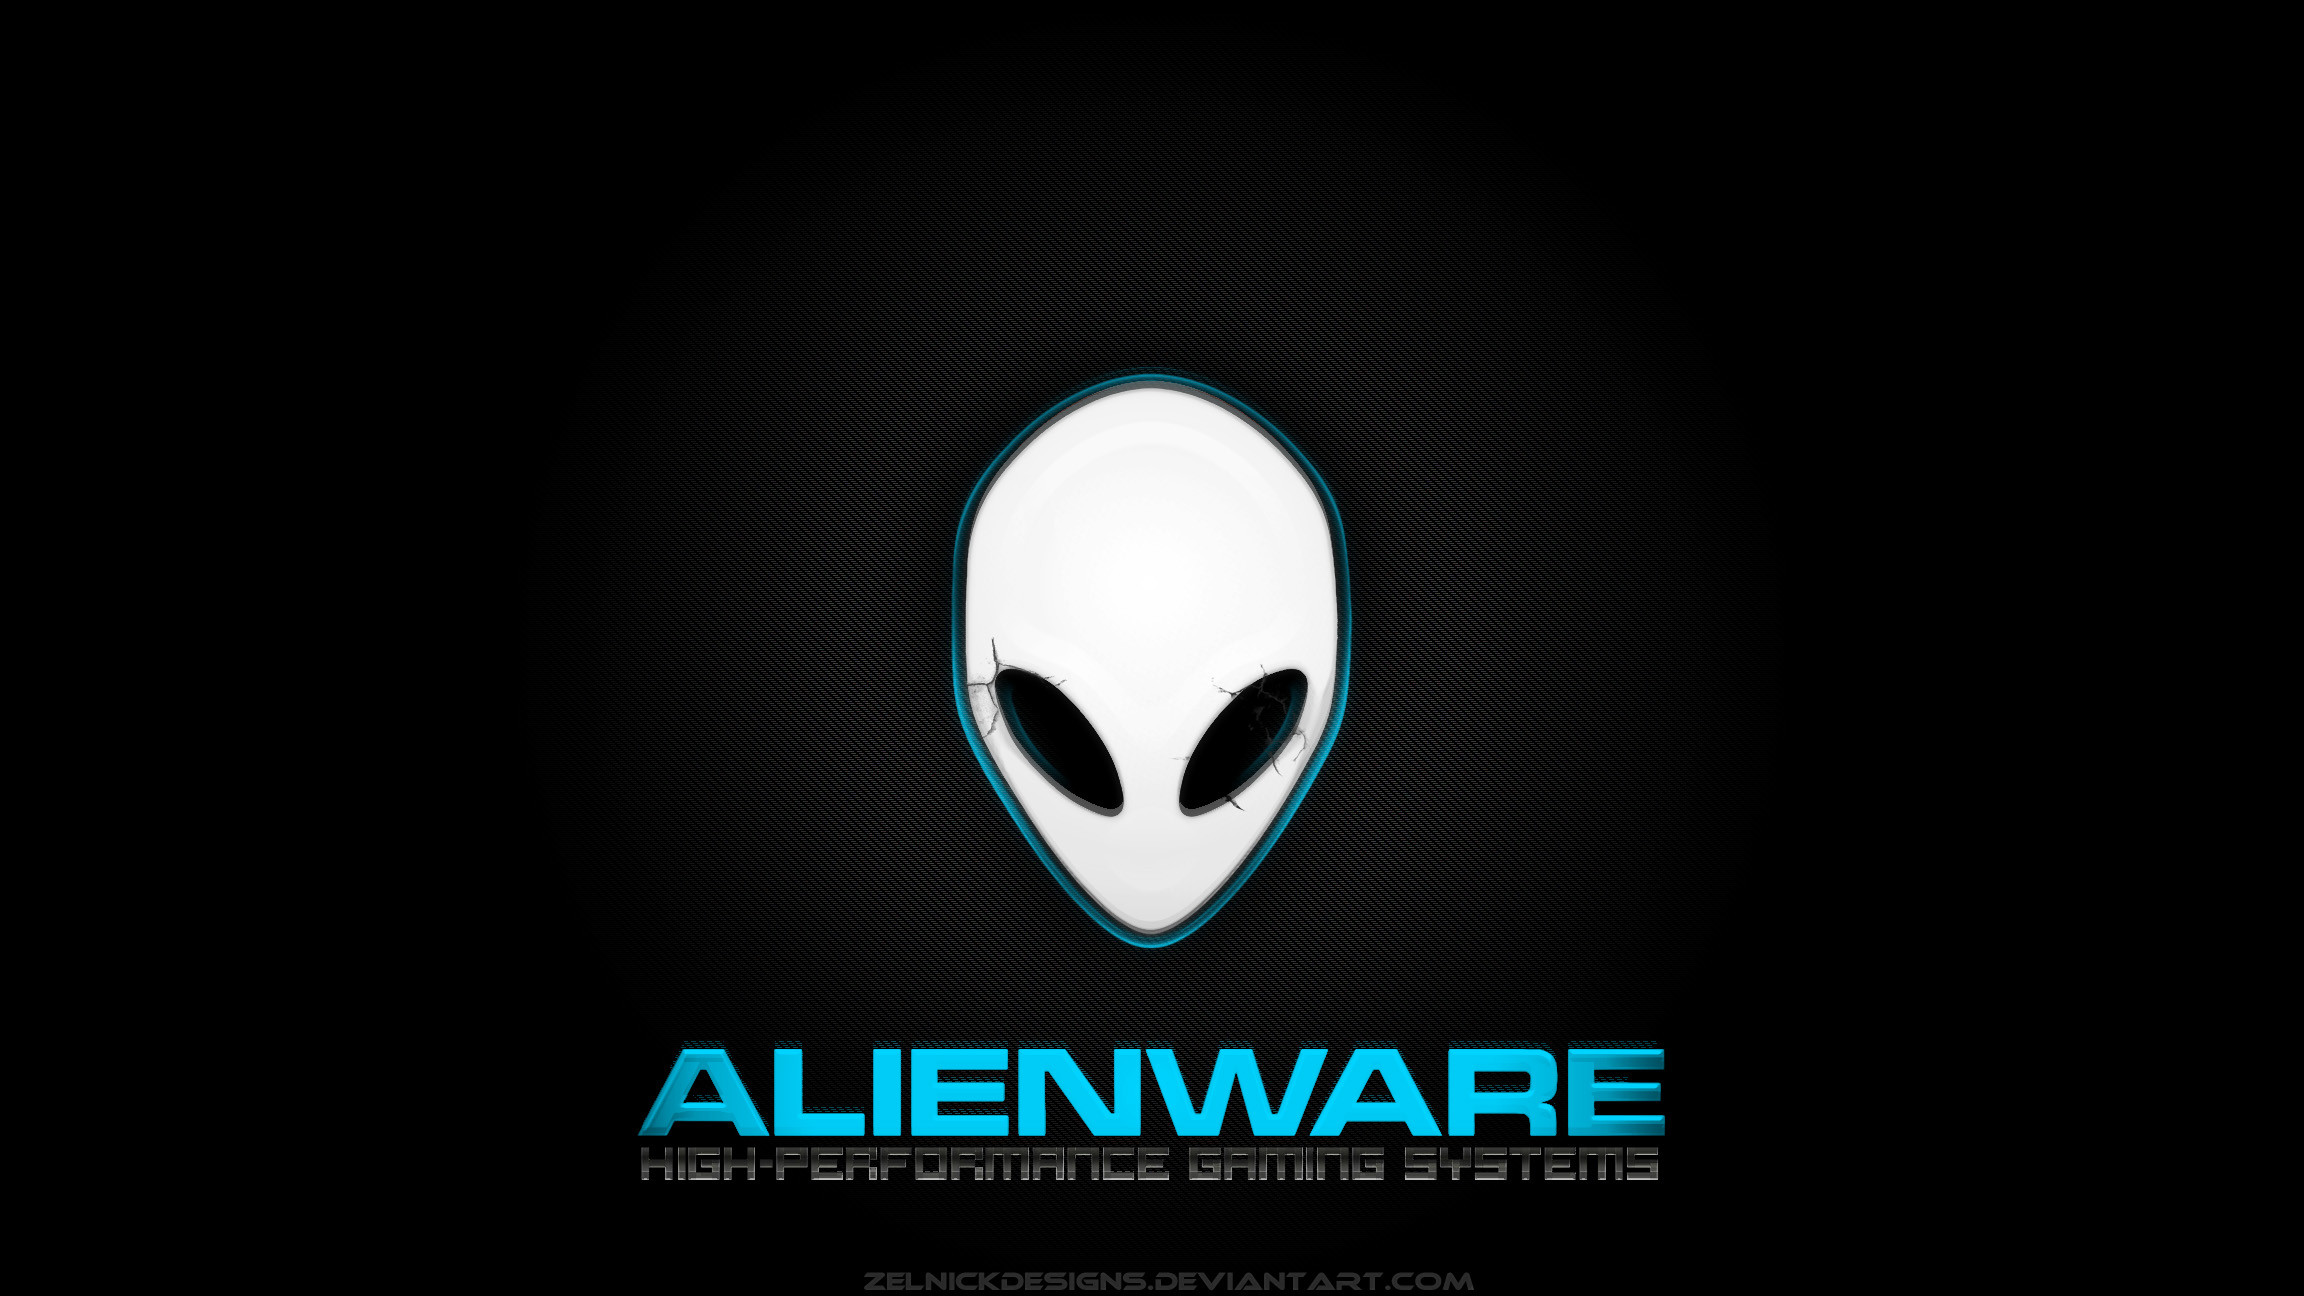 Alienware Wallpaper Pack (63+ images)